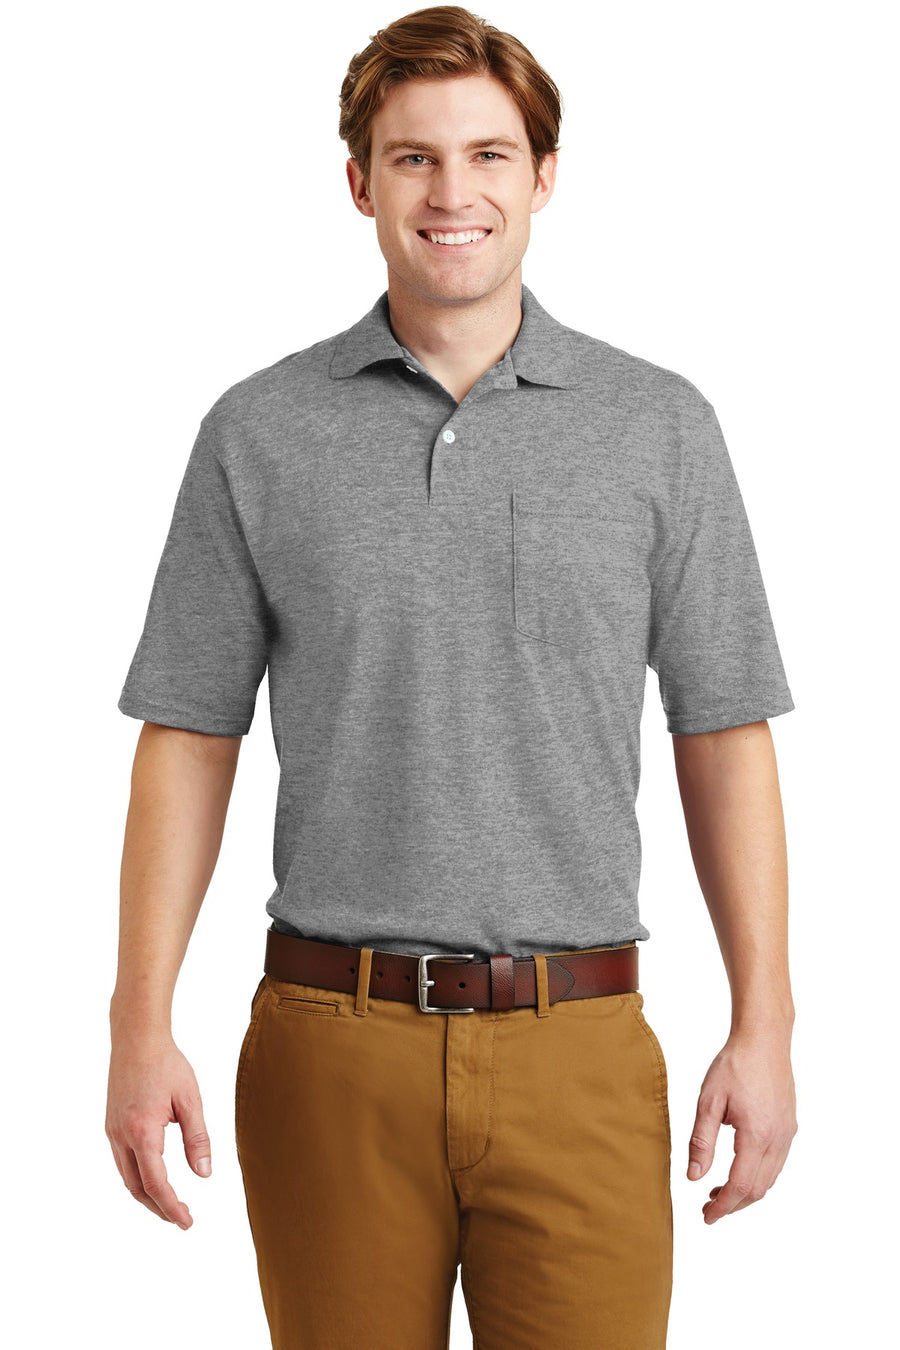 Jerzees -SpotShield 5.4-Ounce Jersey Knit Sport Shirt with Pocket.